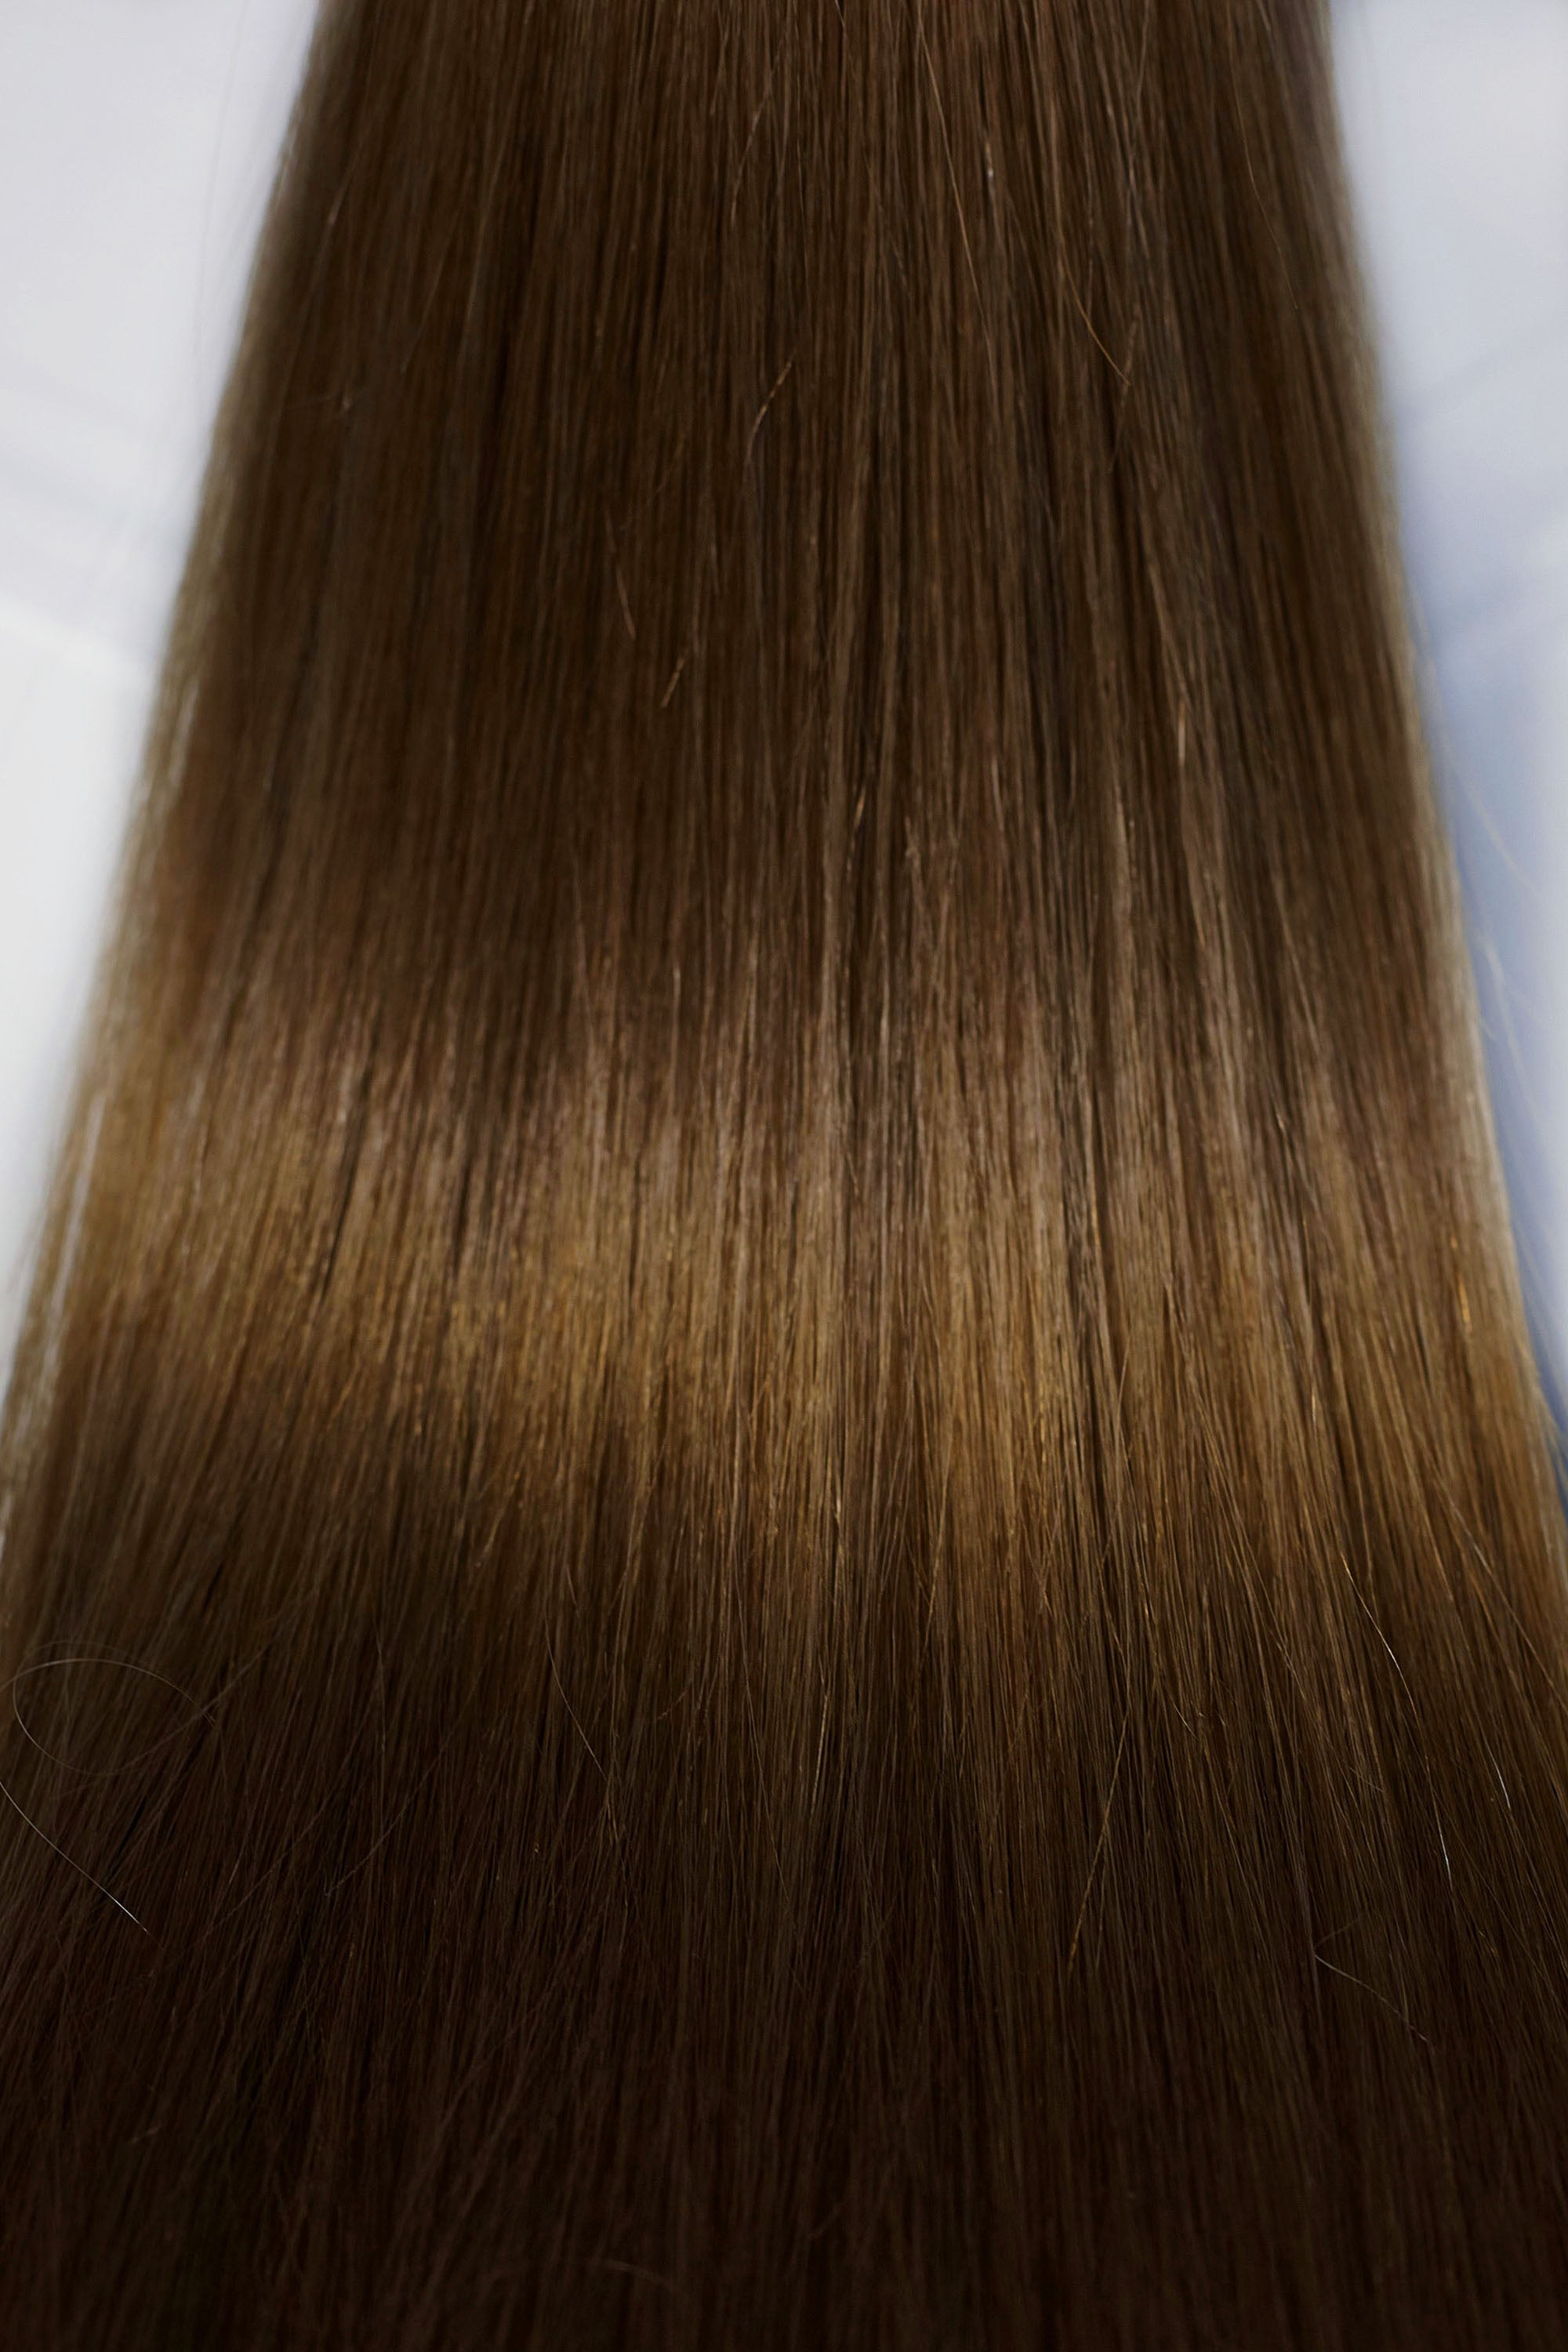 Behair professional Keratin Tip "Premium" 24" (60cm) Natural Straight Honey Walnut Brown #5 - 25g (1g each pcs) hair extensions